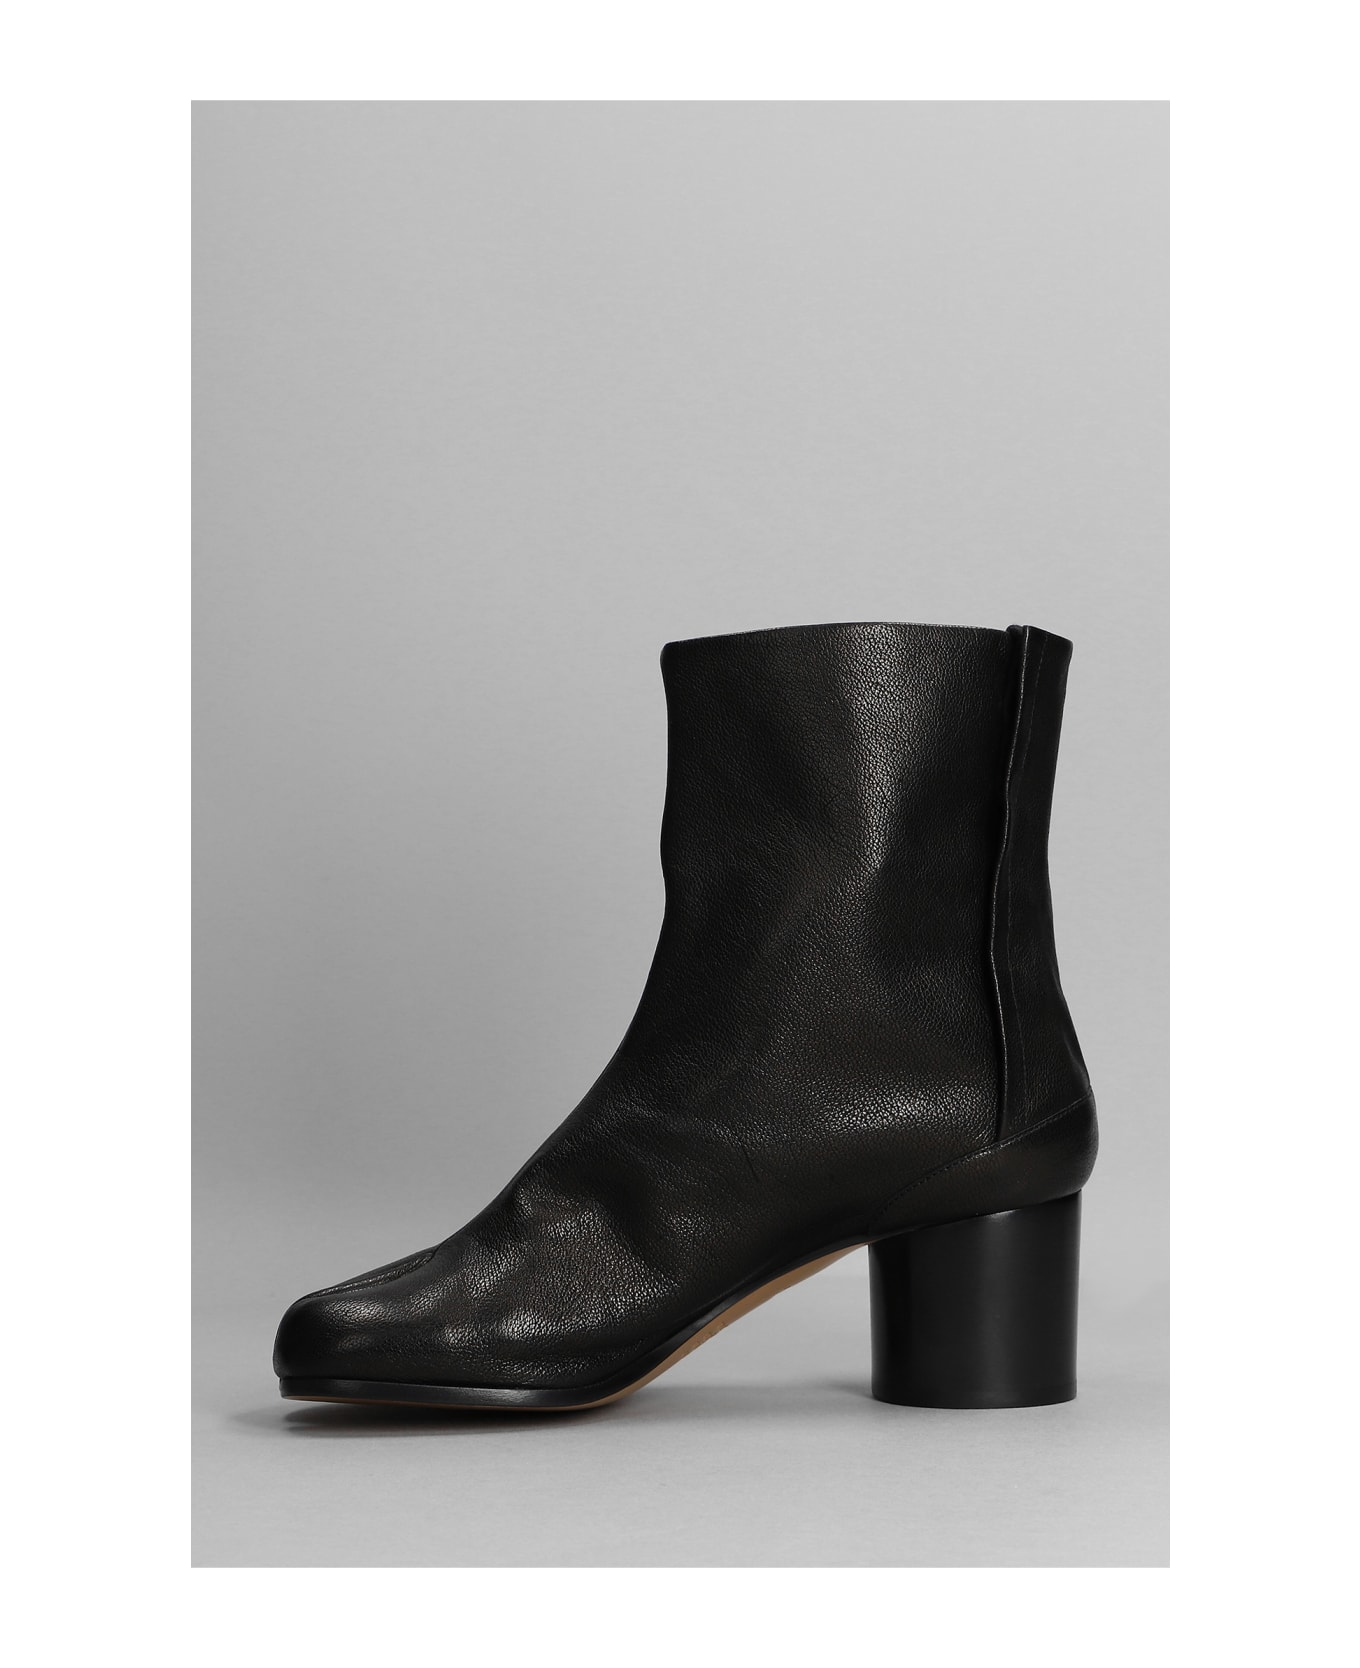 Maison Margiela Tabi Low Heels Ankle Boots In Black Leather - Nero